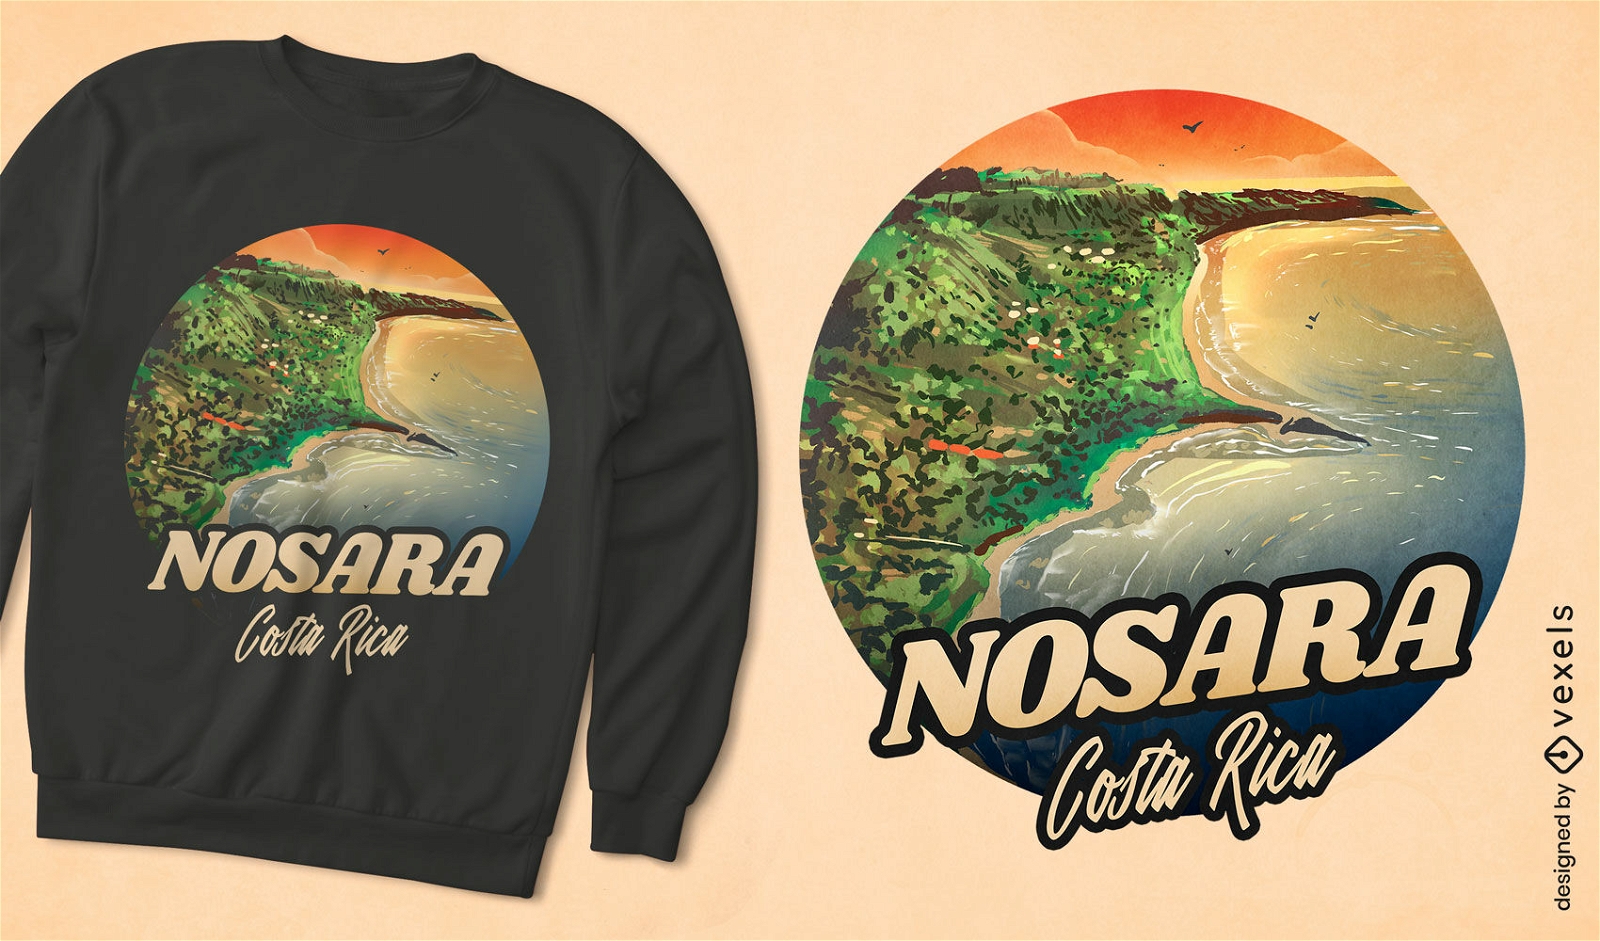 Nosara Costa Rica touristic t-shirt design